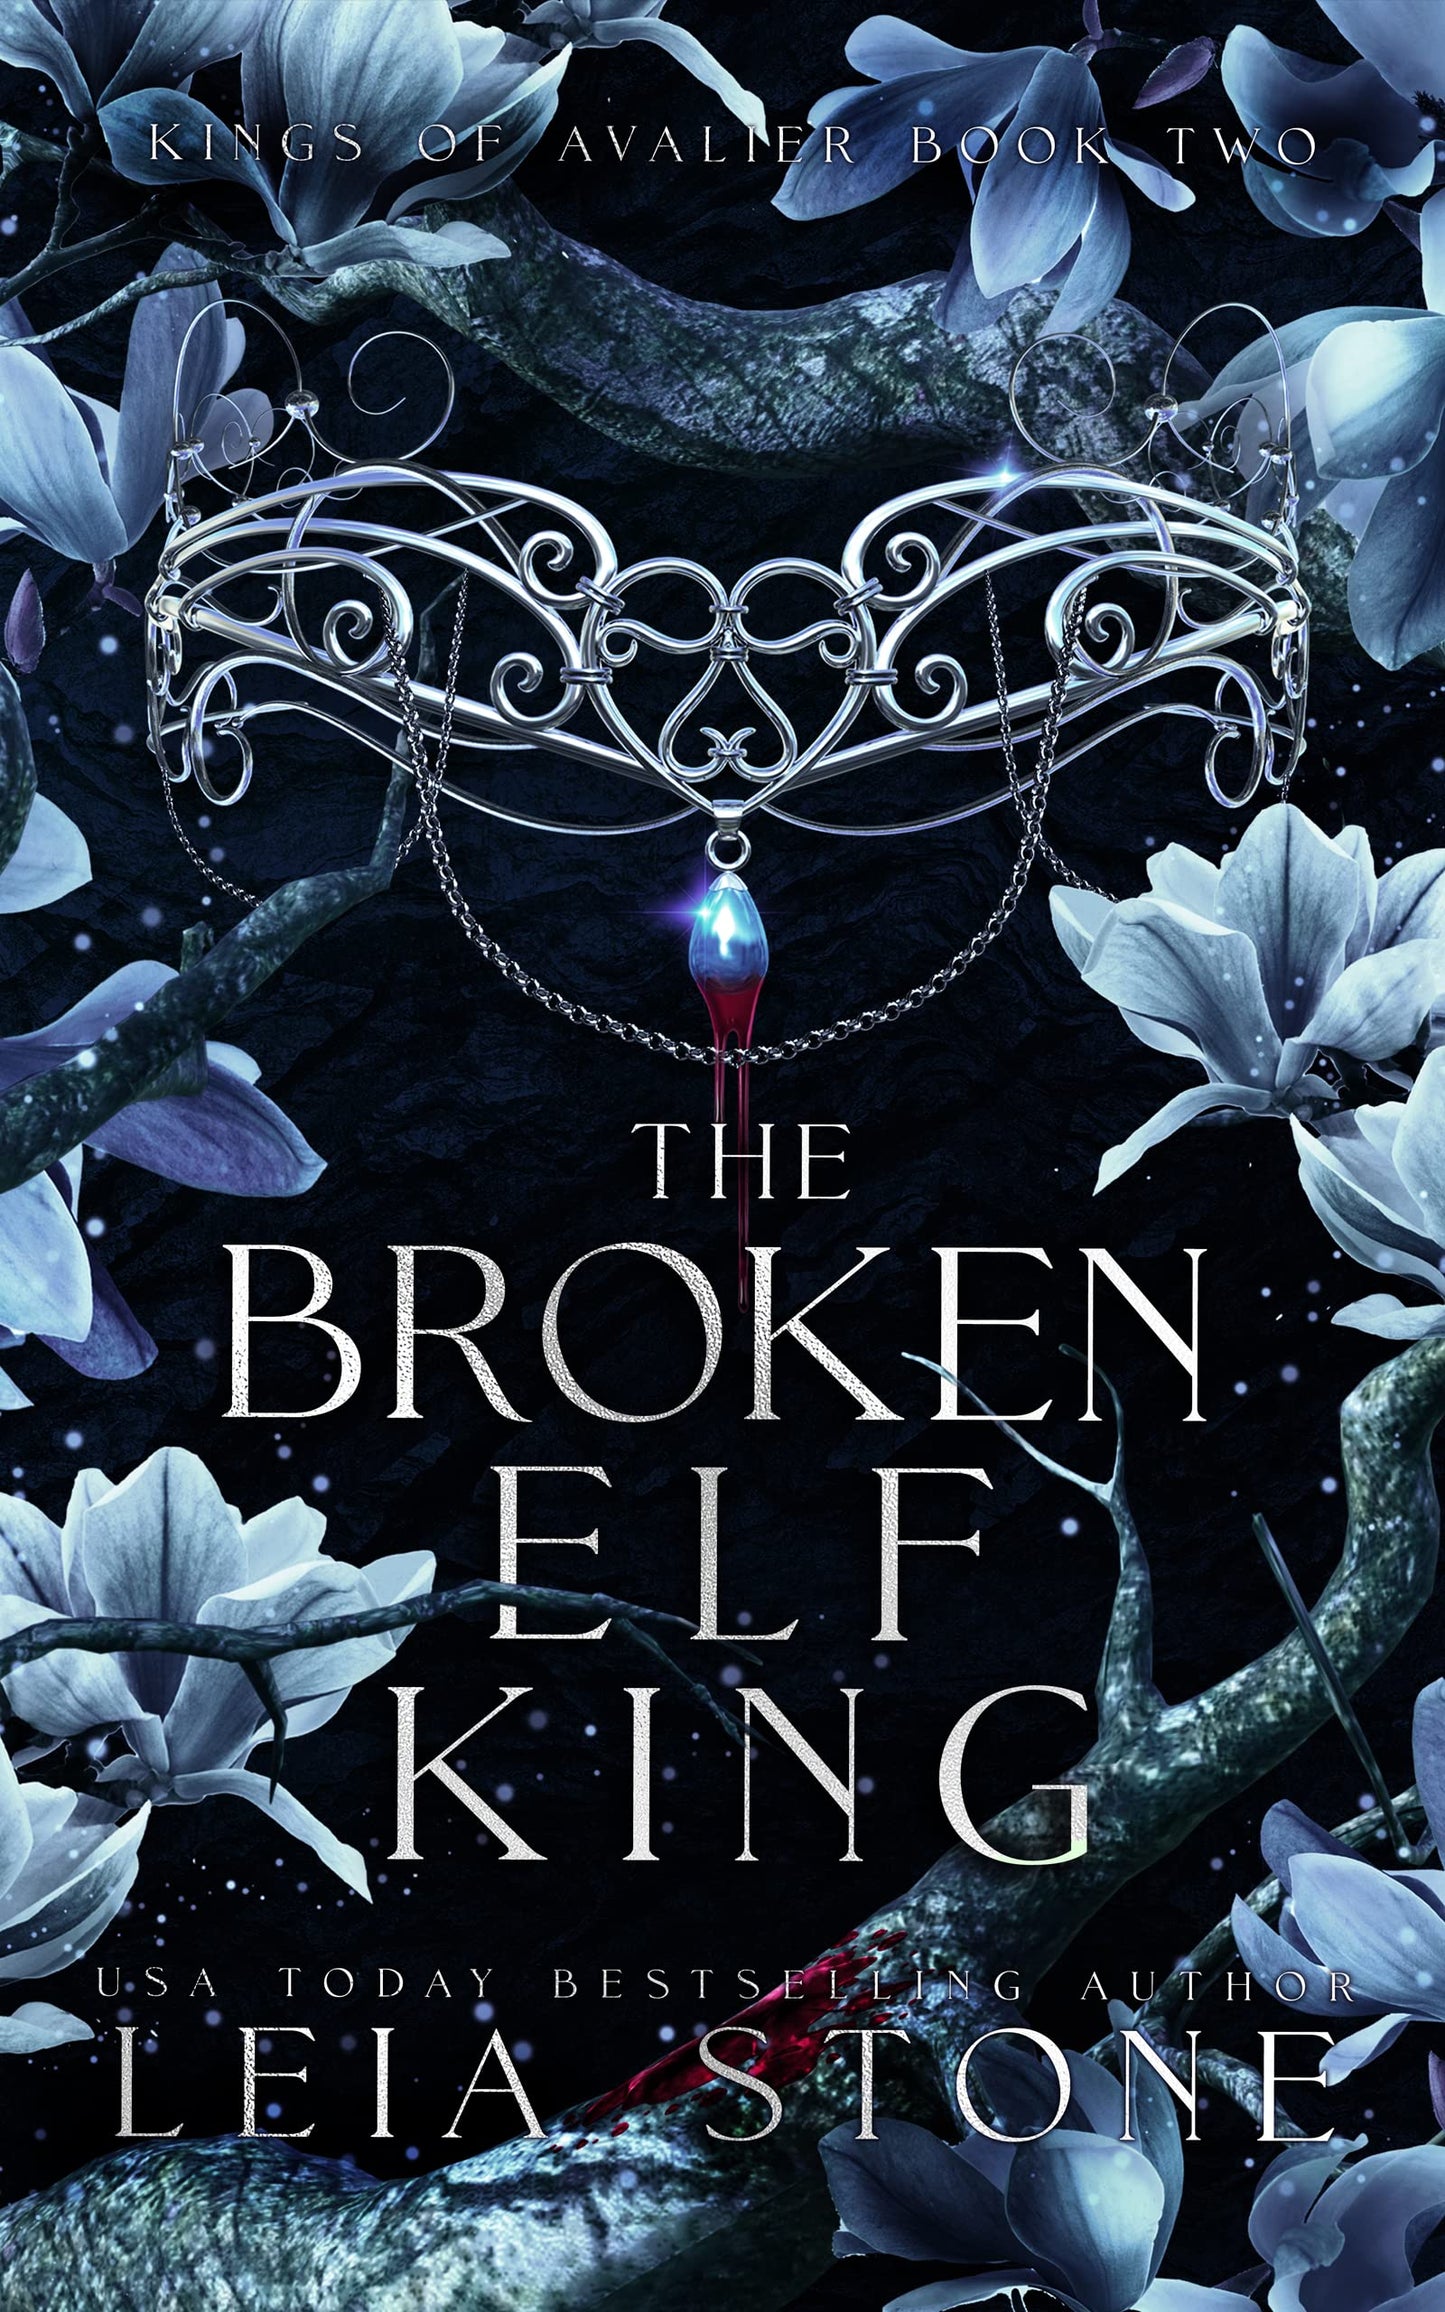 The Broken Elf King (Kings of Avalier #2) by Leia Stone